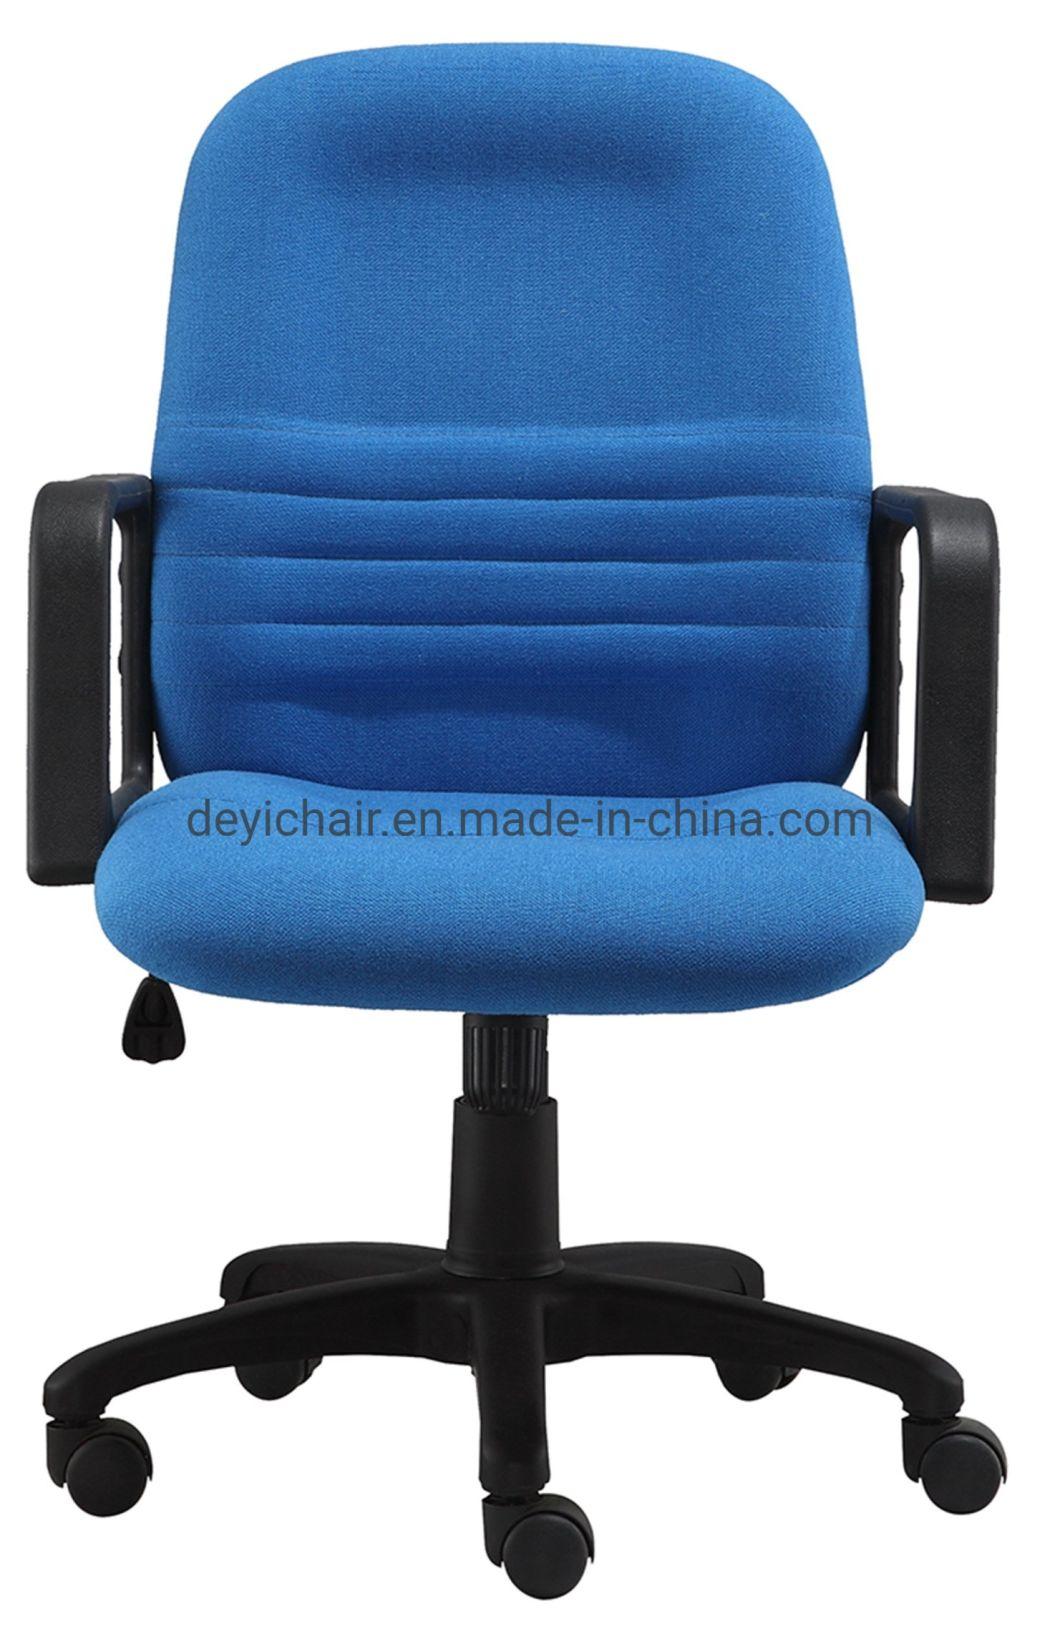 Simple Tilting Mechanism Medium Back 300mm Nylon Base with PP Armrest Blue Color Office Chair